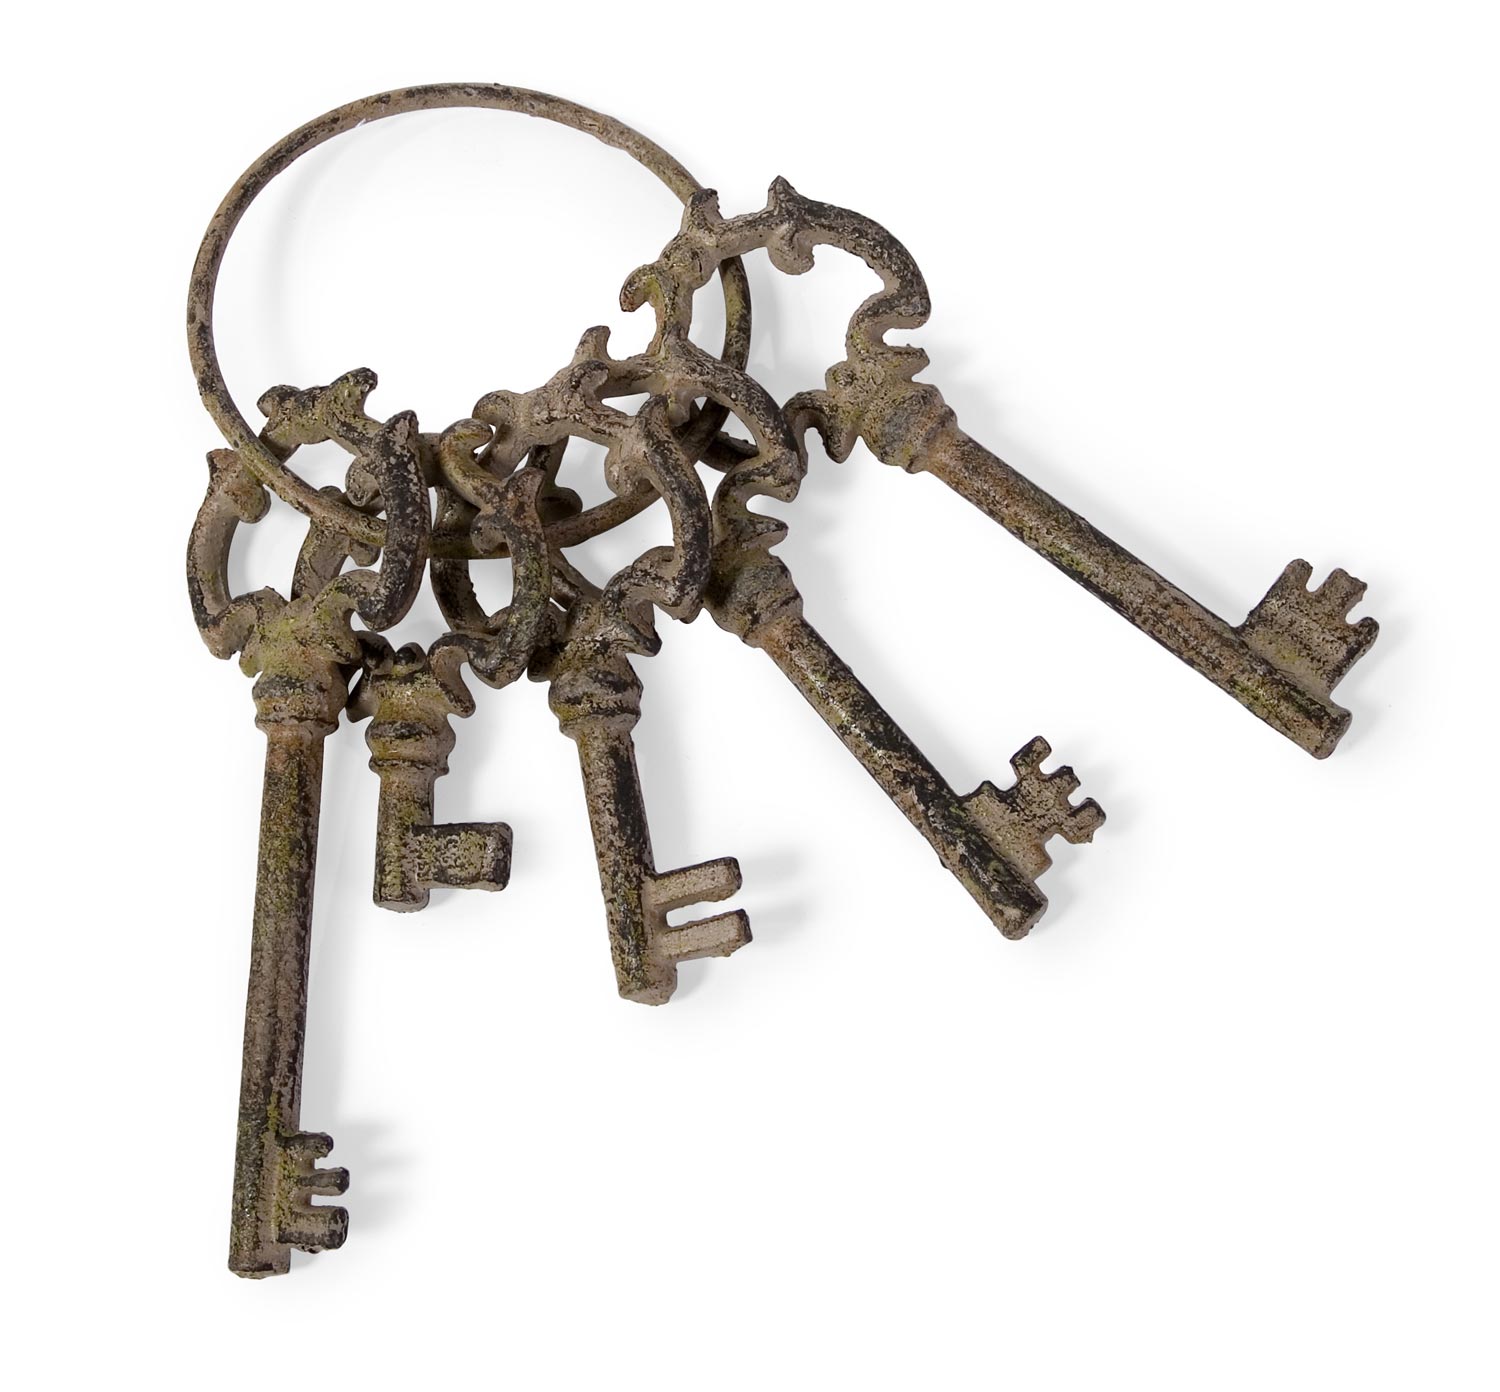 Unique ключ. Ключ французский дверной. Декоративный ключ из металла. Ключ скелет. Ключ декоративный винтажный.